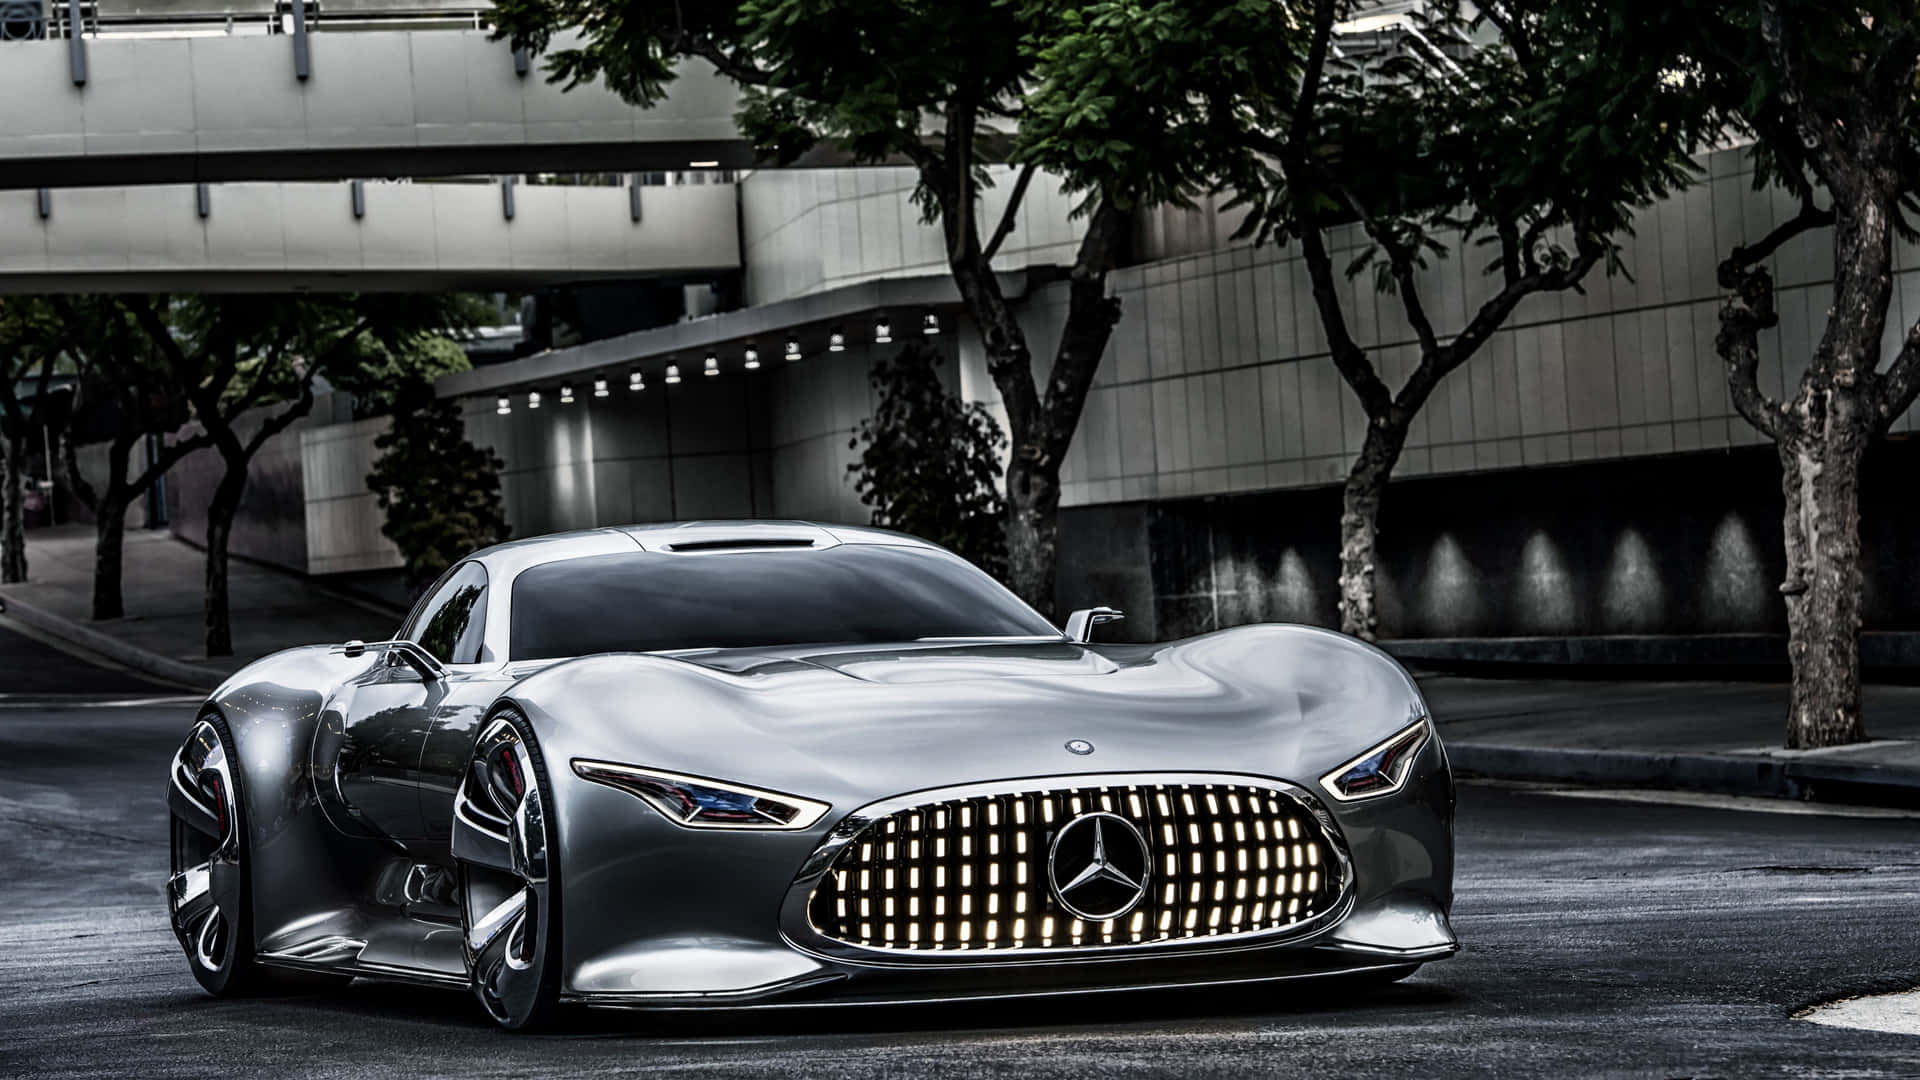 Stunning 4K Mercedes Wallpaper featuring a Luxury Sports Car